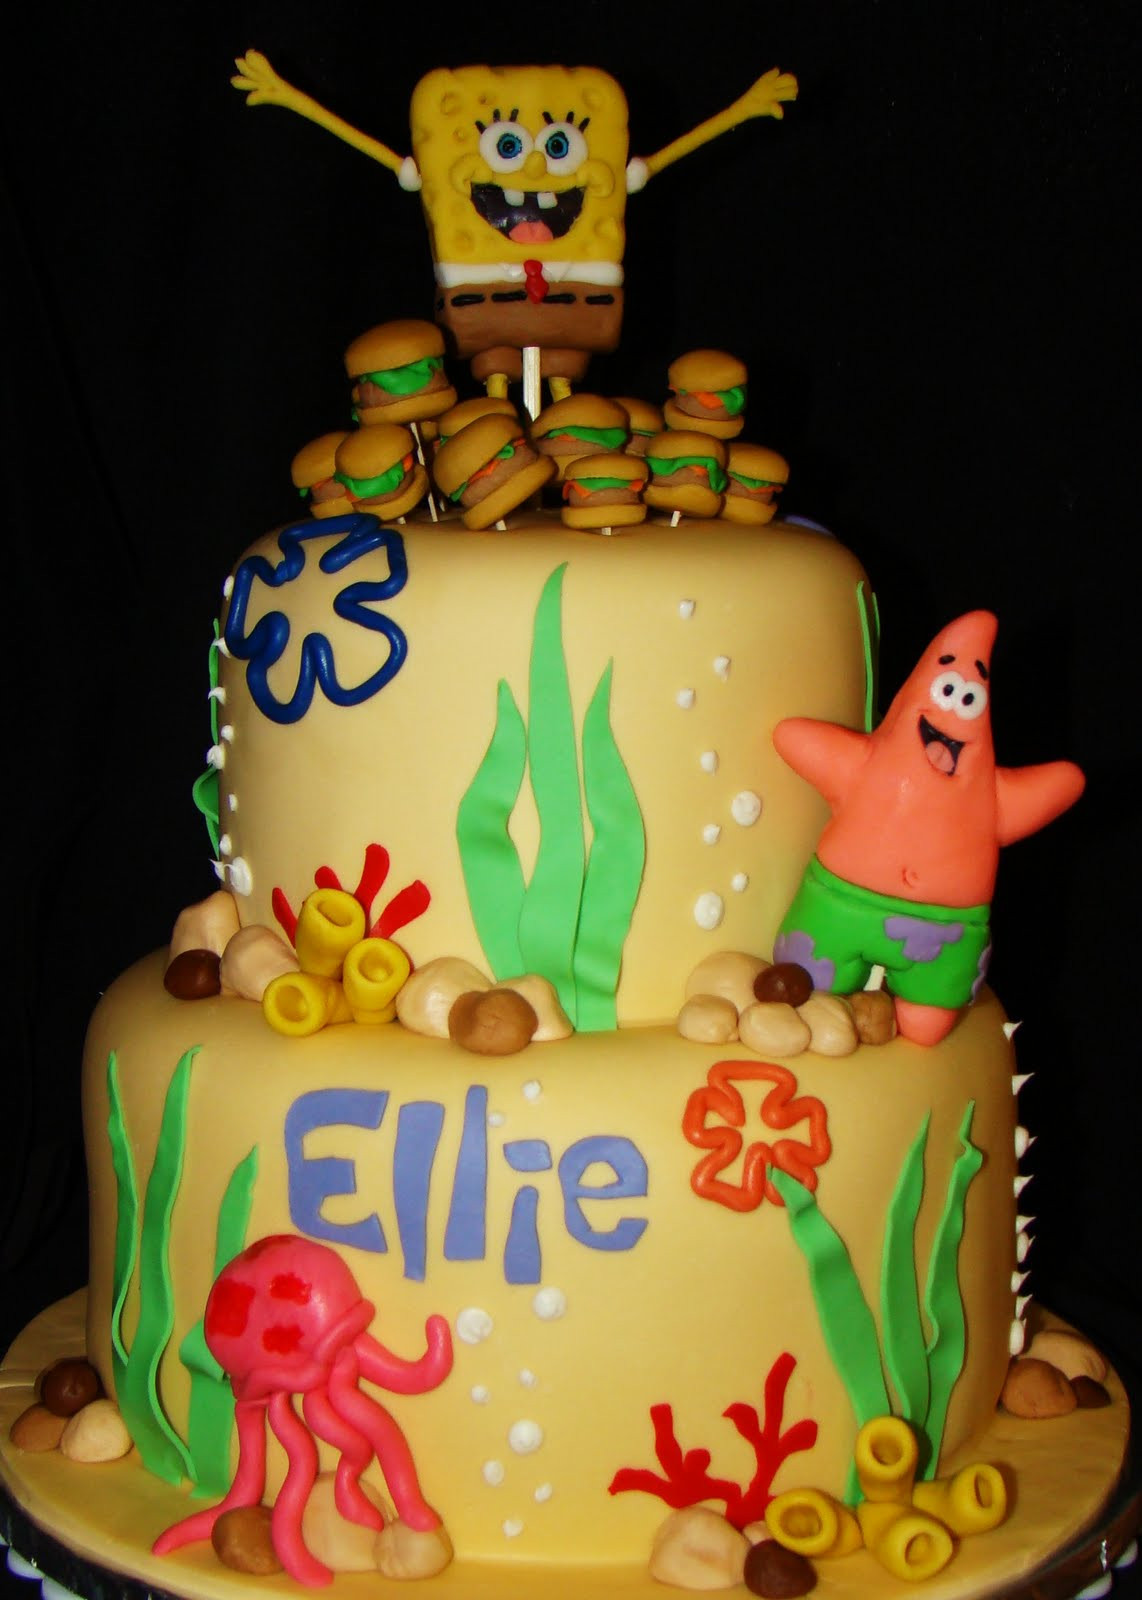 Spongebob Birthday Cakes
 Layers of Love Spongebob Krabby Patty cake